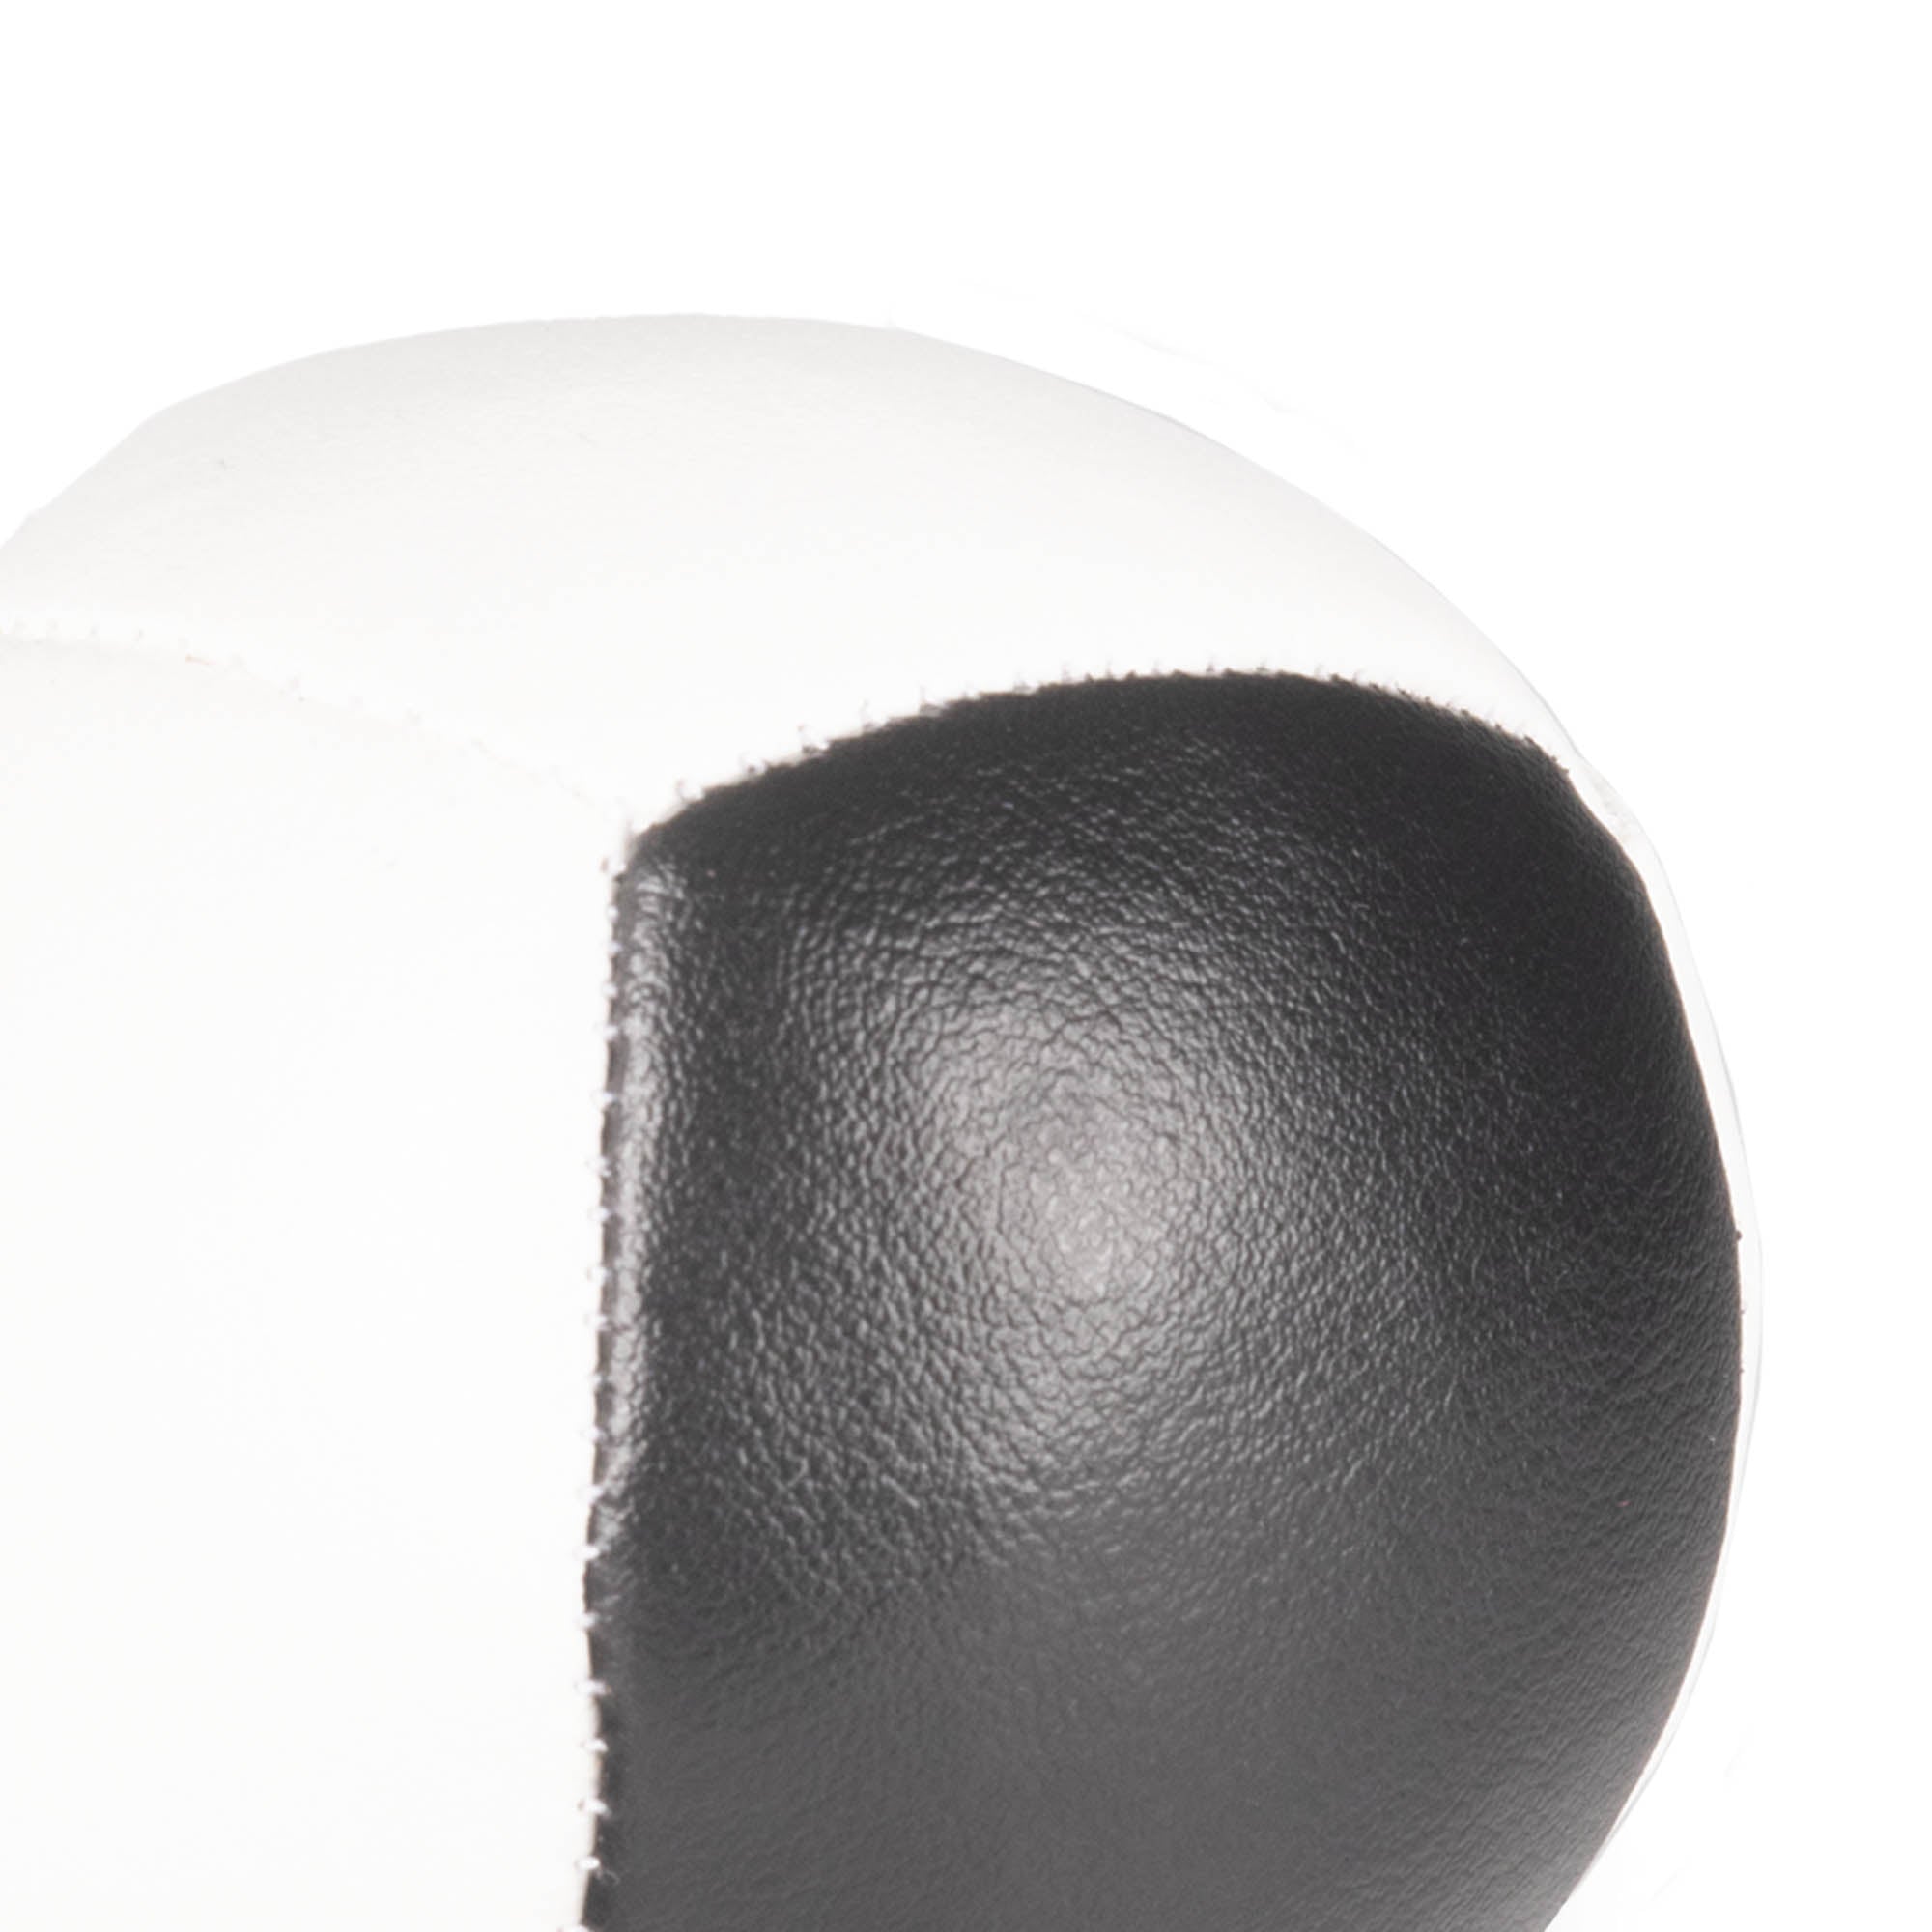 Firetoys 110g thud juggling ball, close up stitching black/white